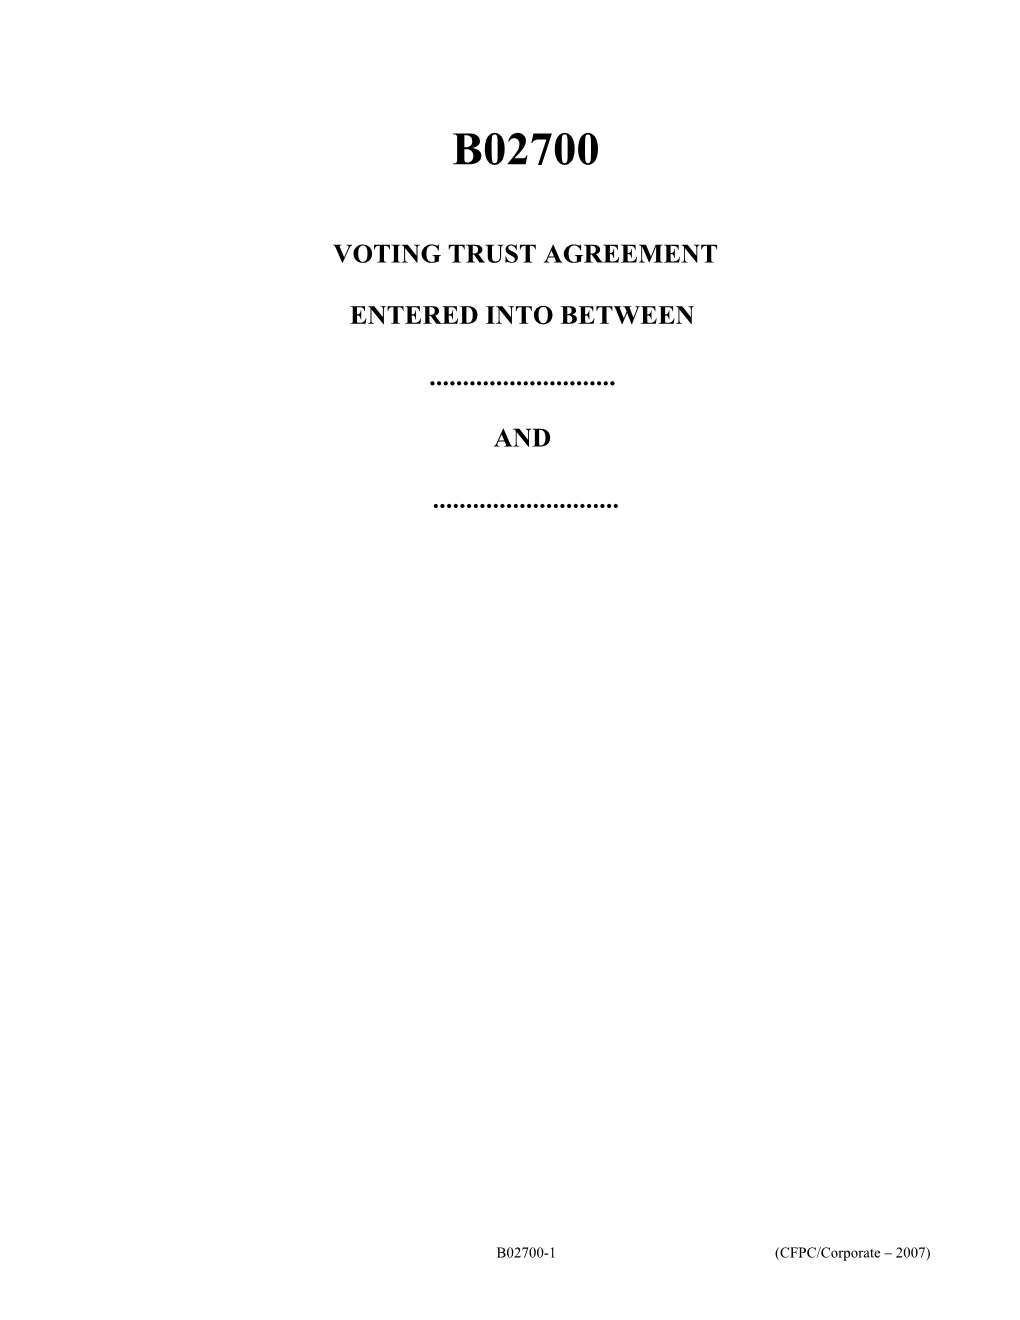 B02700 - Voting Trust Agreement